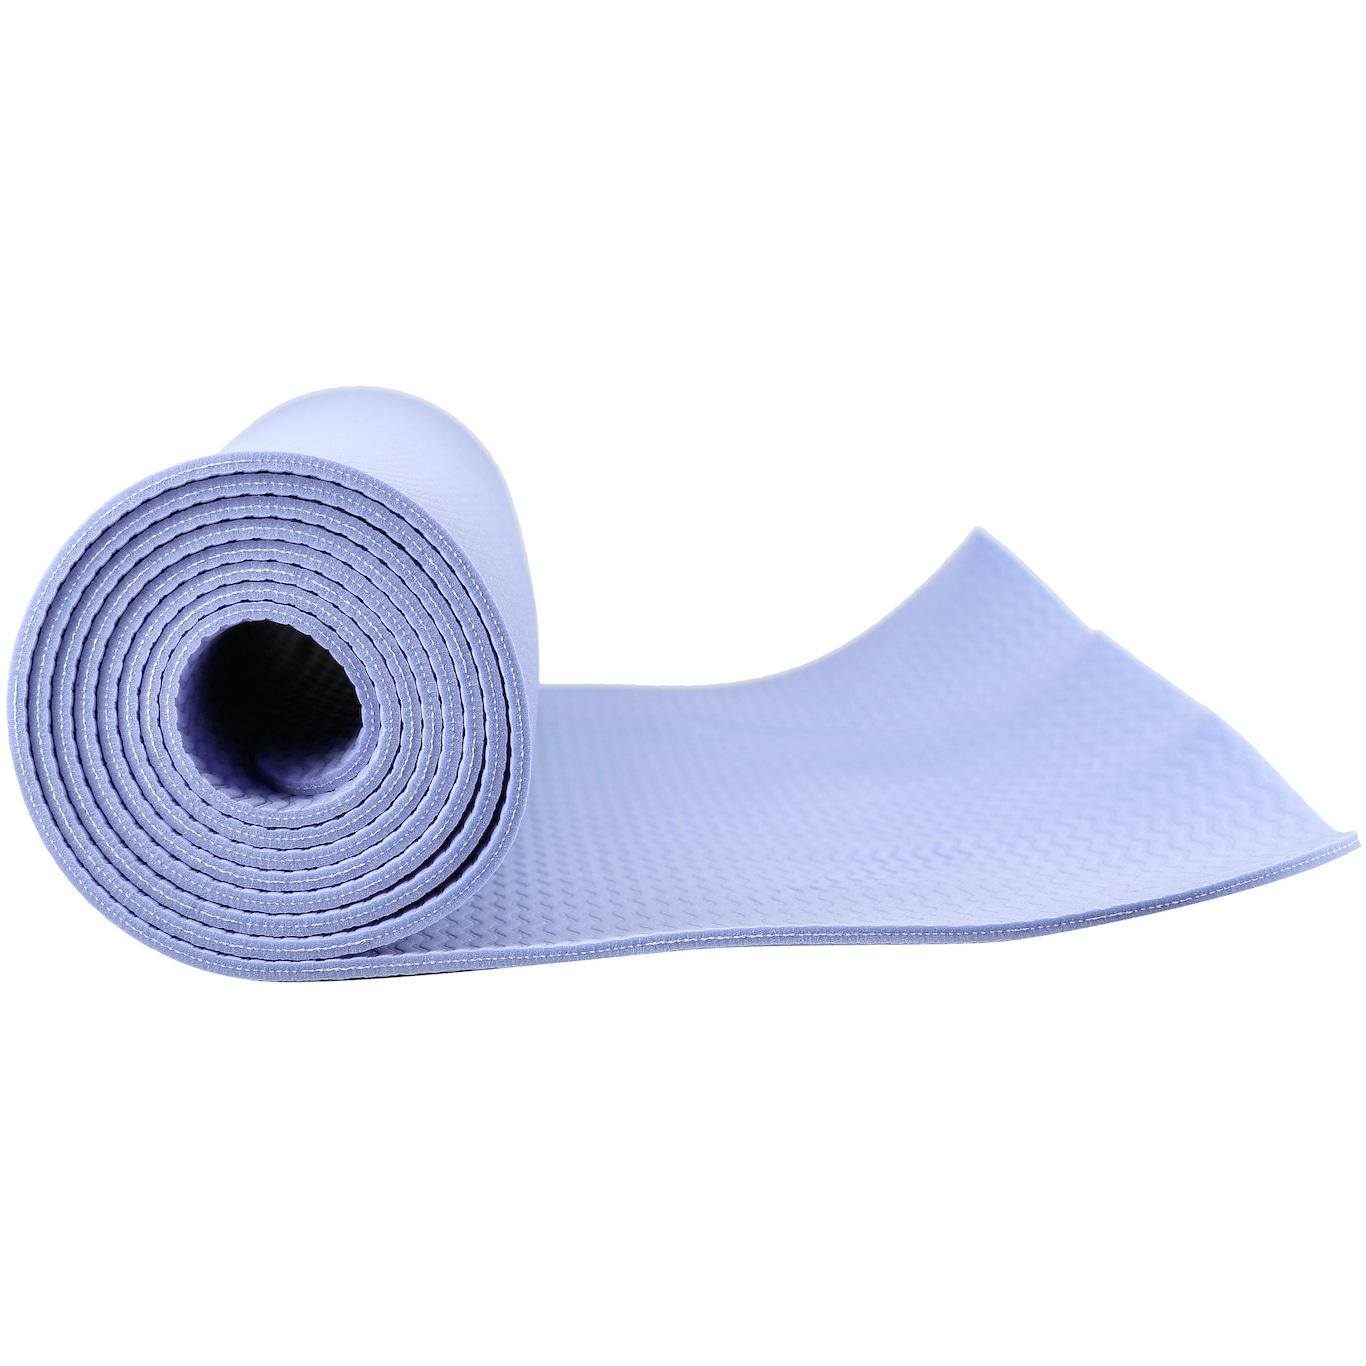 Tapete de ioga Nike Flow Mat 4 mm cinza